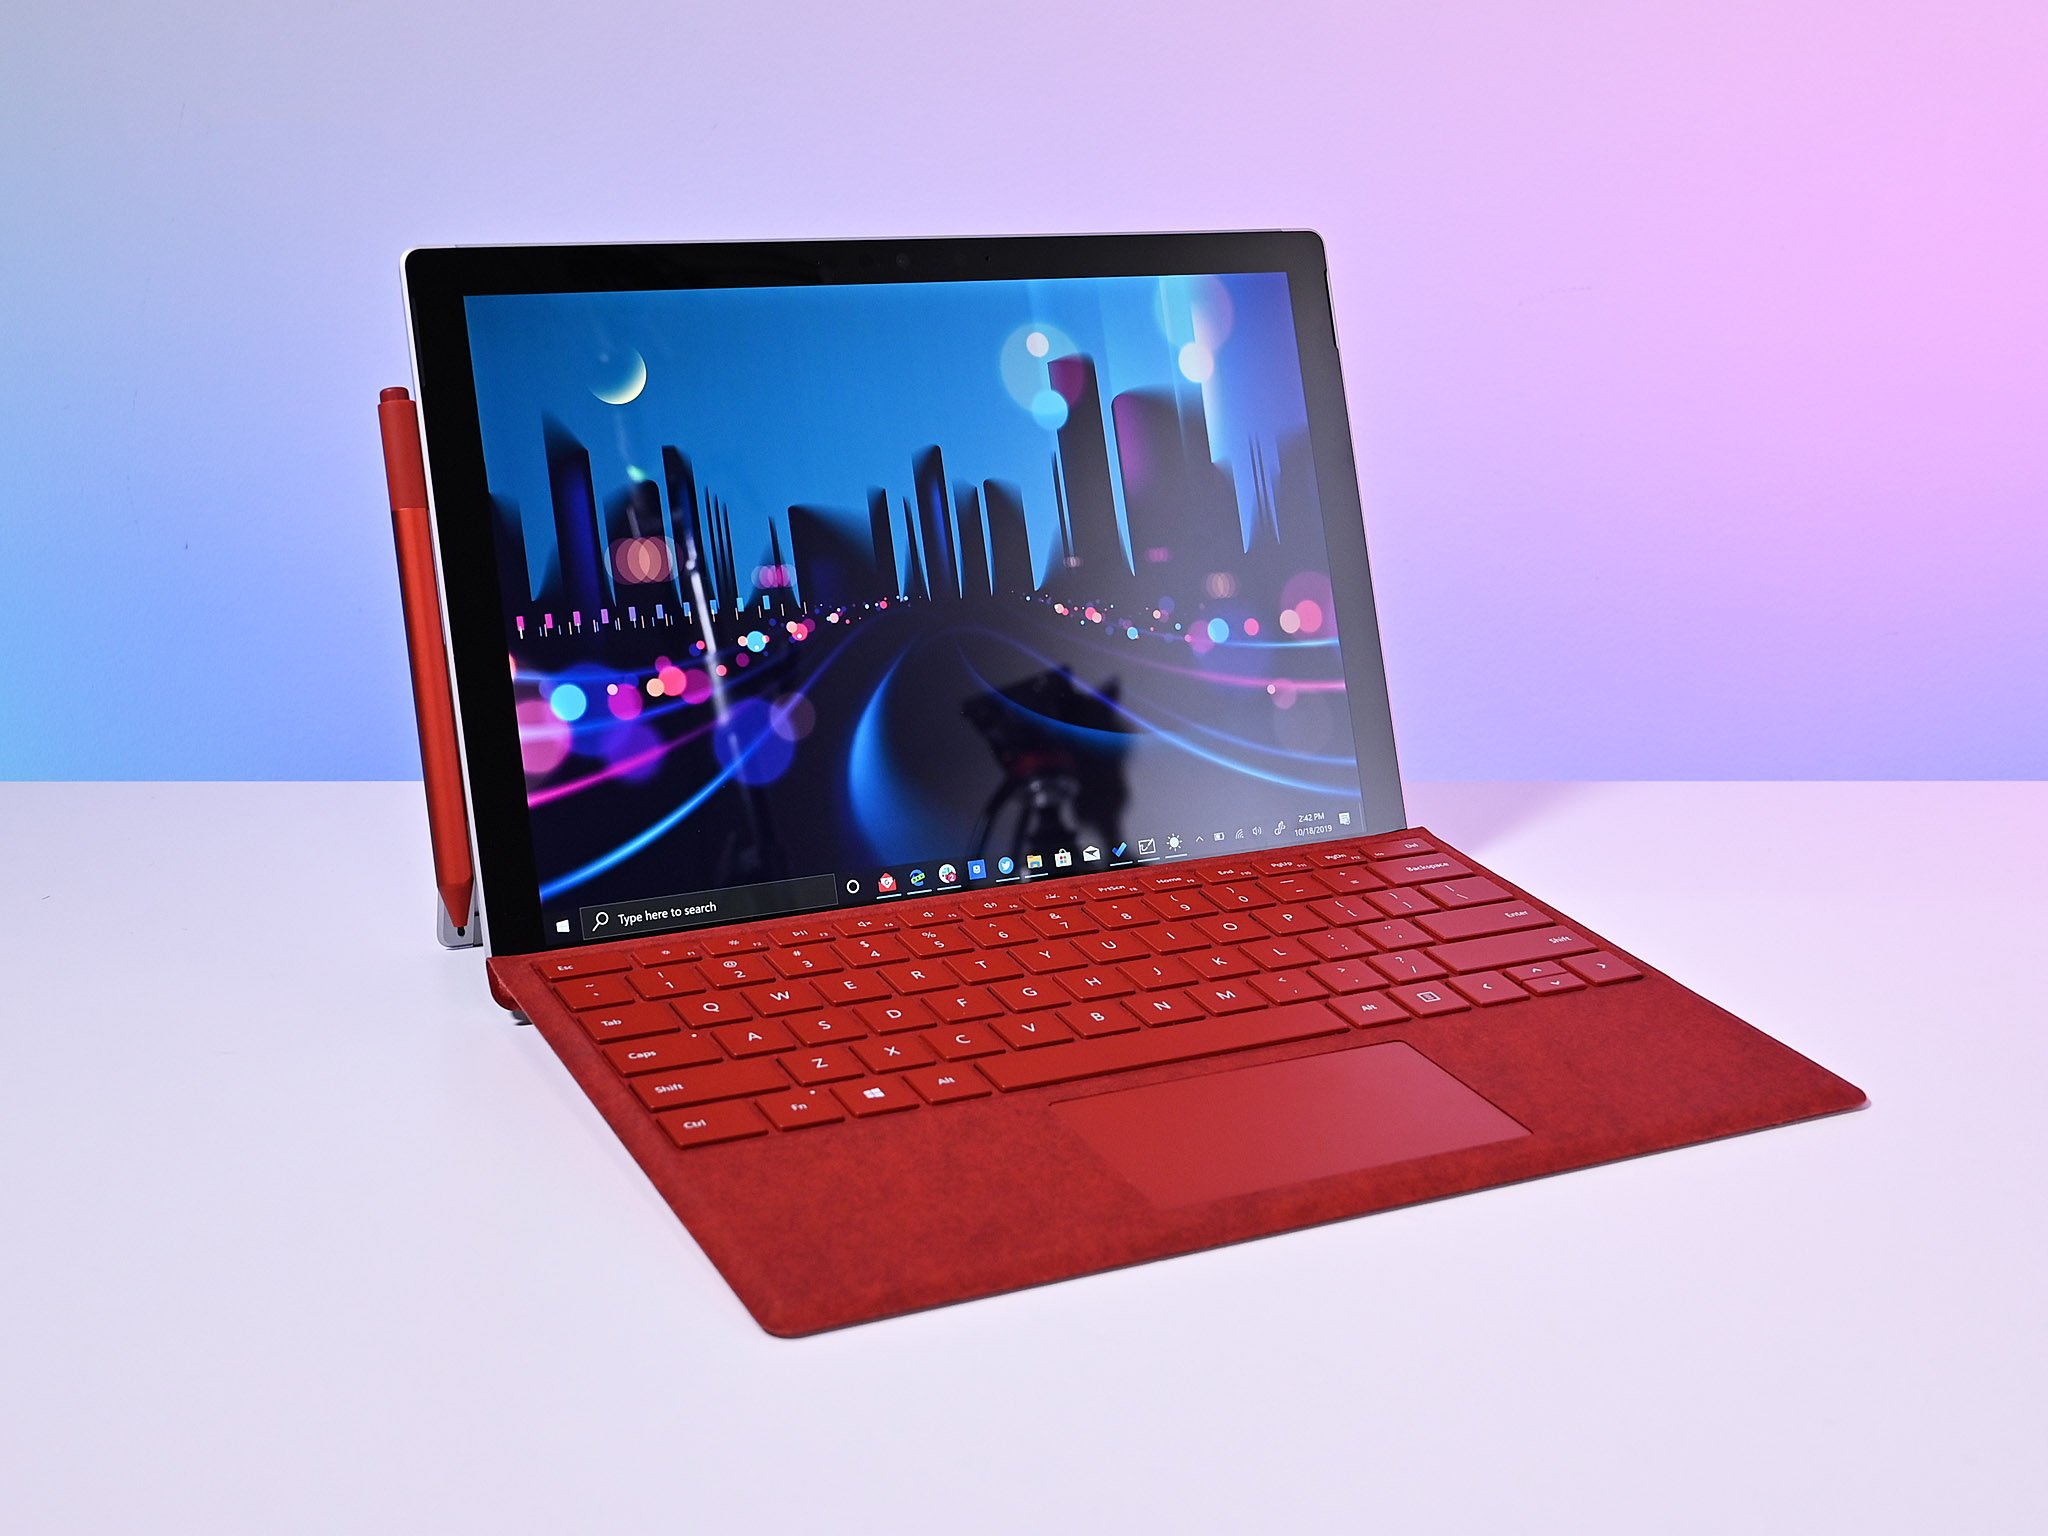 Microsoft Surface Pro 7+ 12.3” Touch-Screen Intel Core i3 8GB